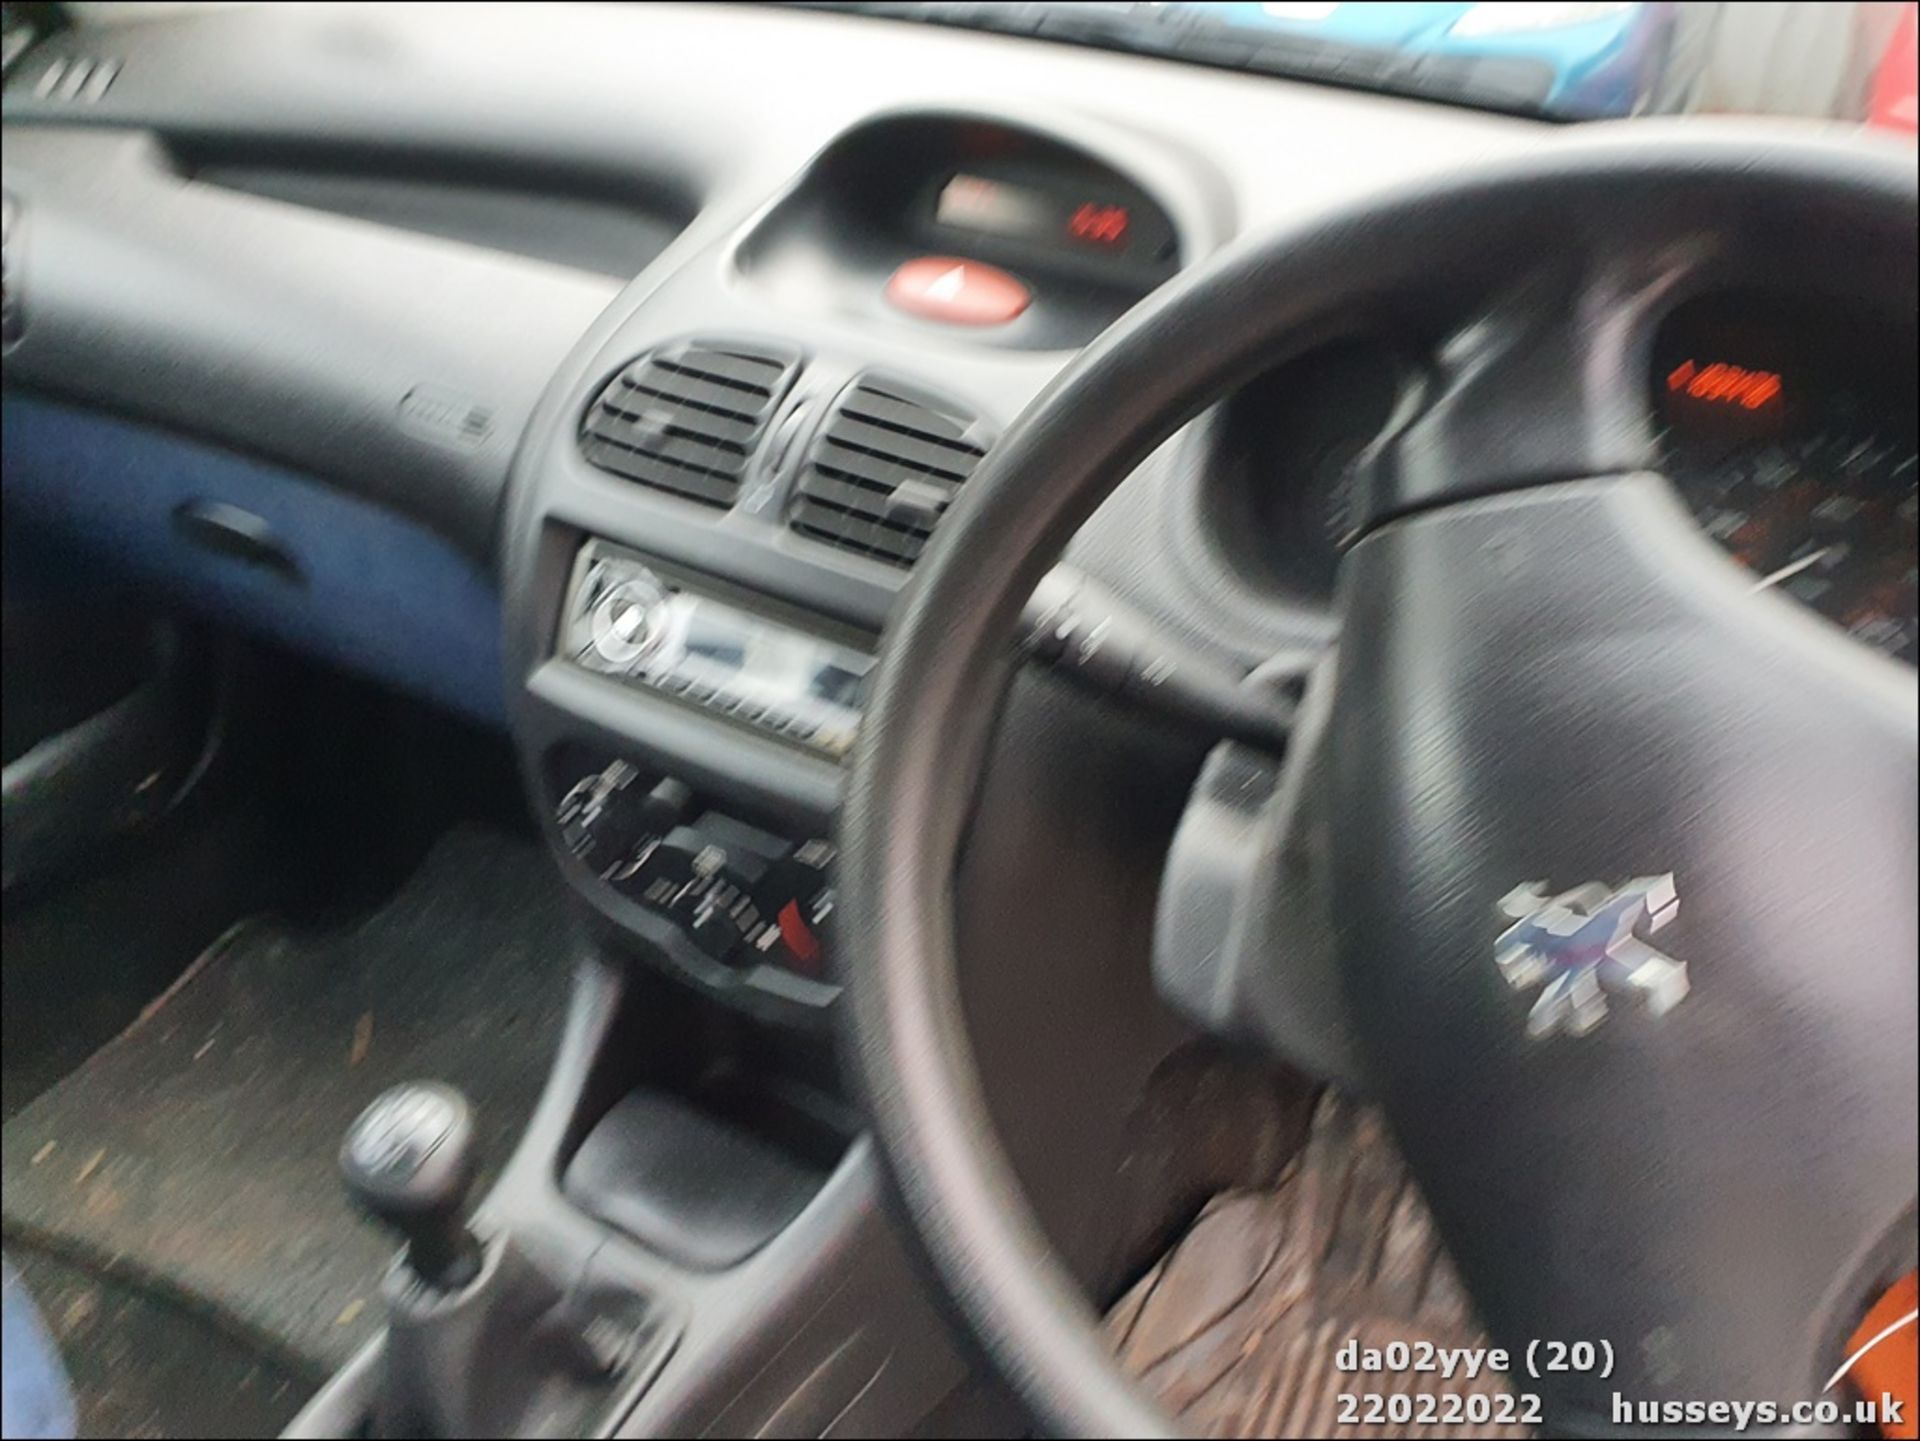 02/02 PEUGEOT 206 STYLE HDI - 1398cc 3dr Hatchback (Blue, 103k) - Image 20 of 38